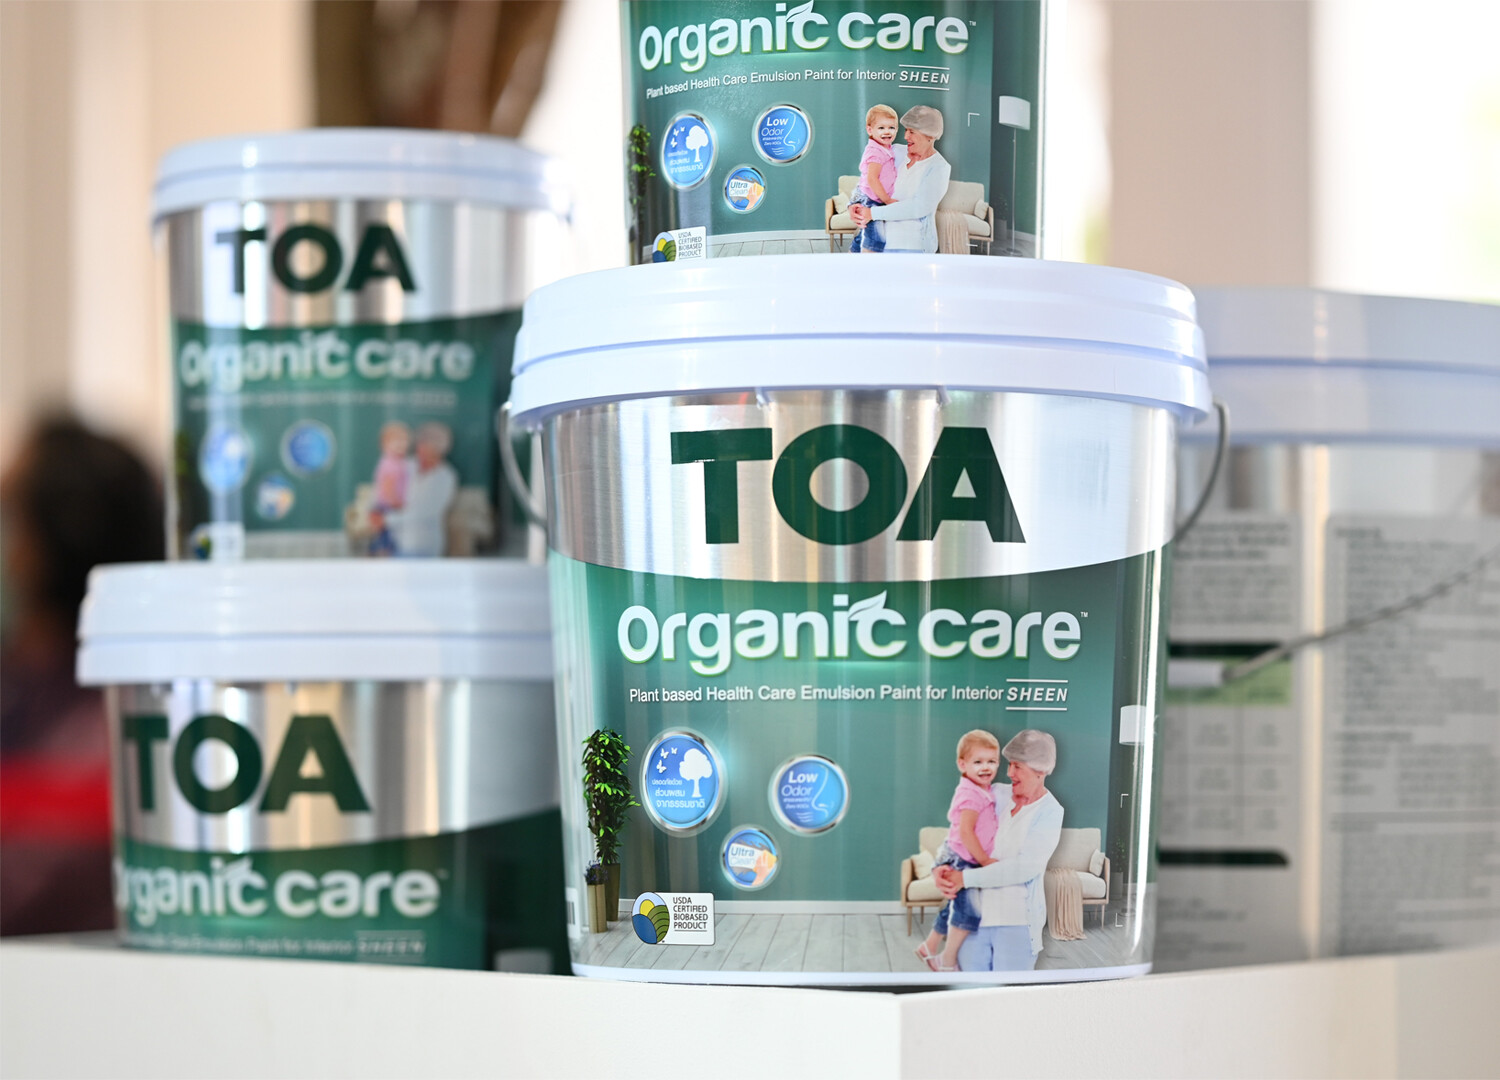 TOA Organic Care ตอกย้ำความสำเร็จ คว้ารางวัลชนะเลิศ Best Innovation Award 2022 จากเวทีงานสถาปนิก'65